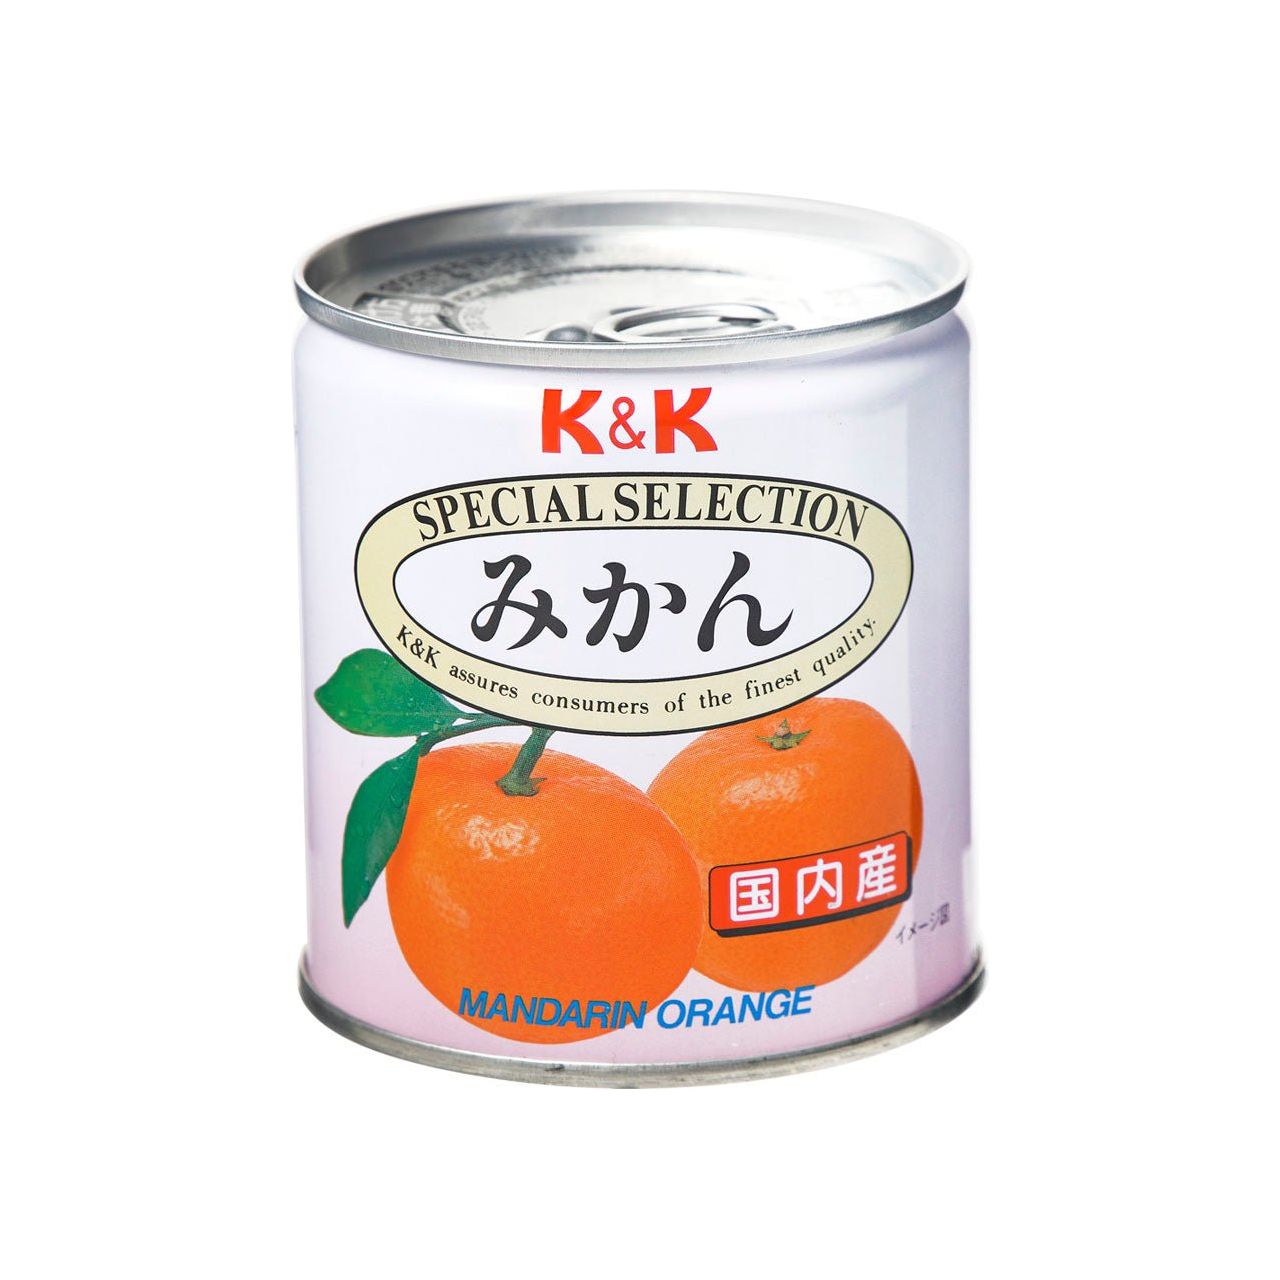 Oranges de mandarin K&K (petite)